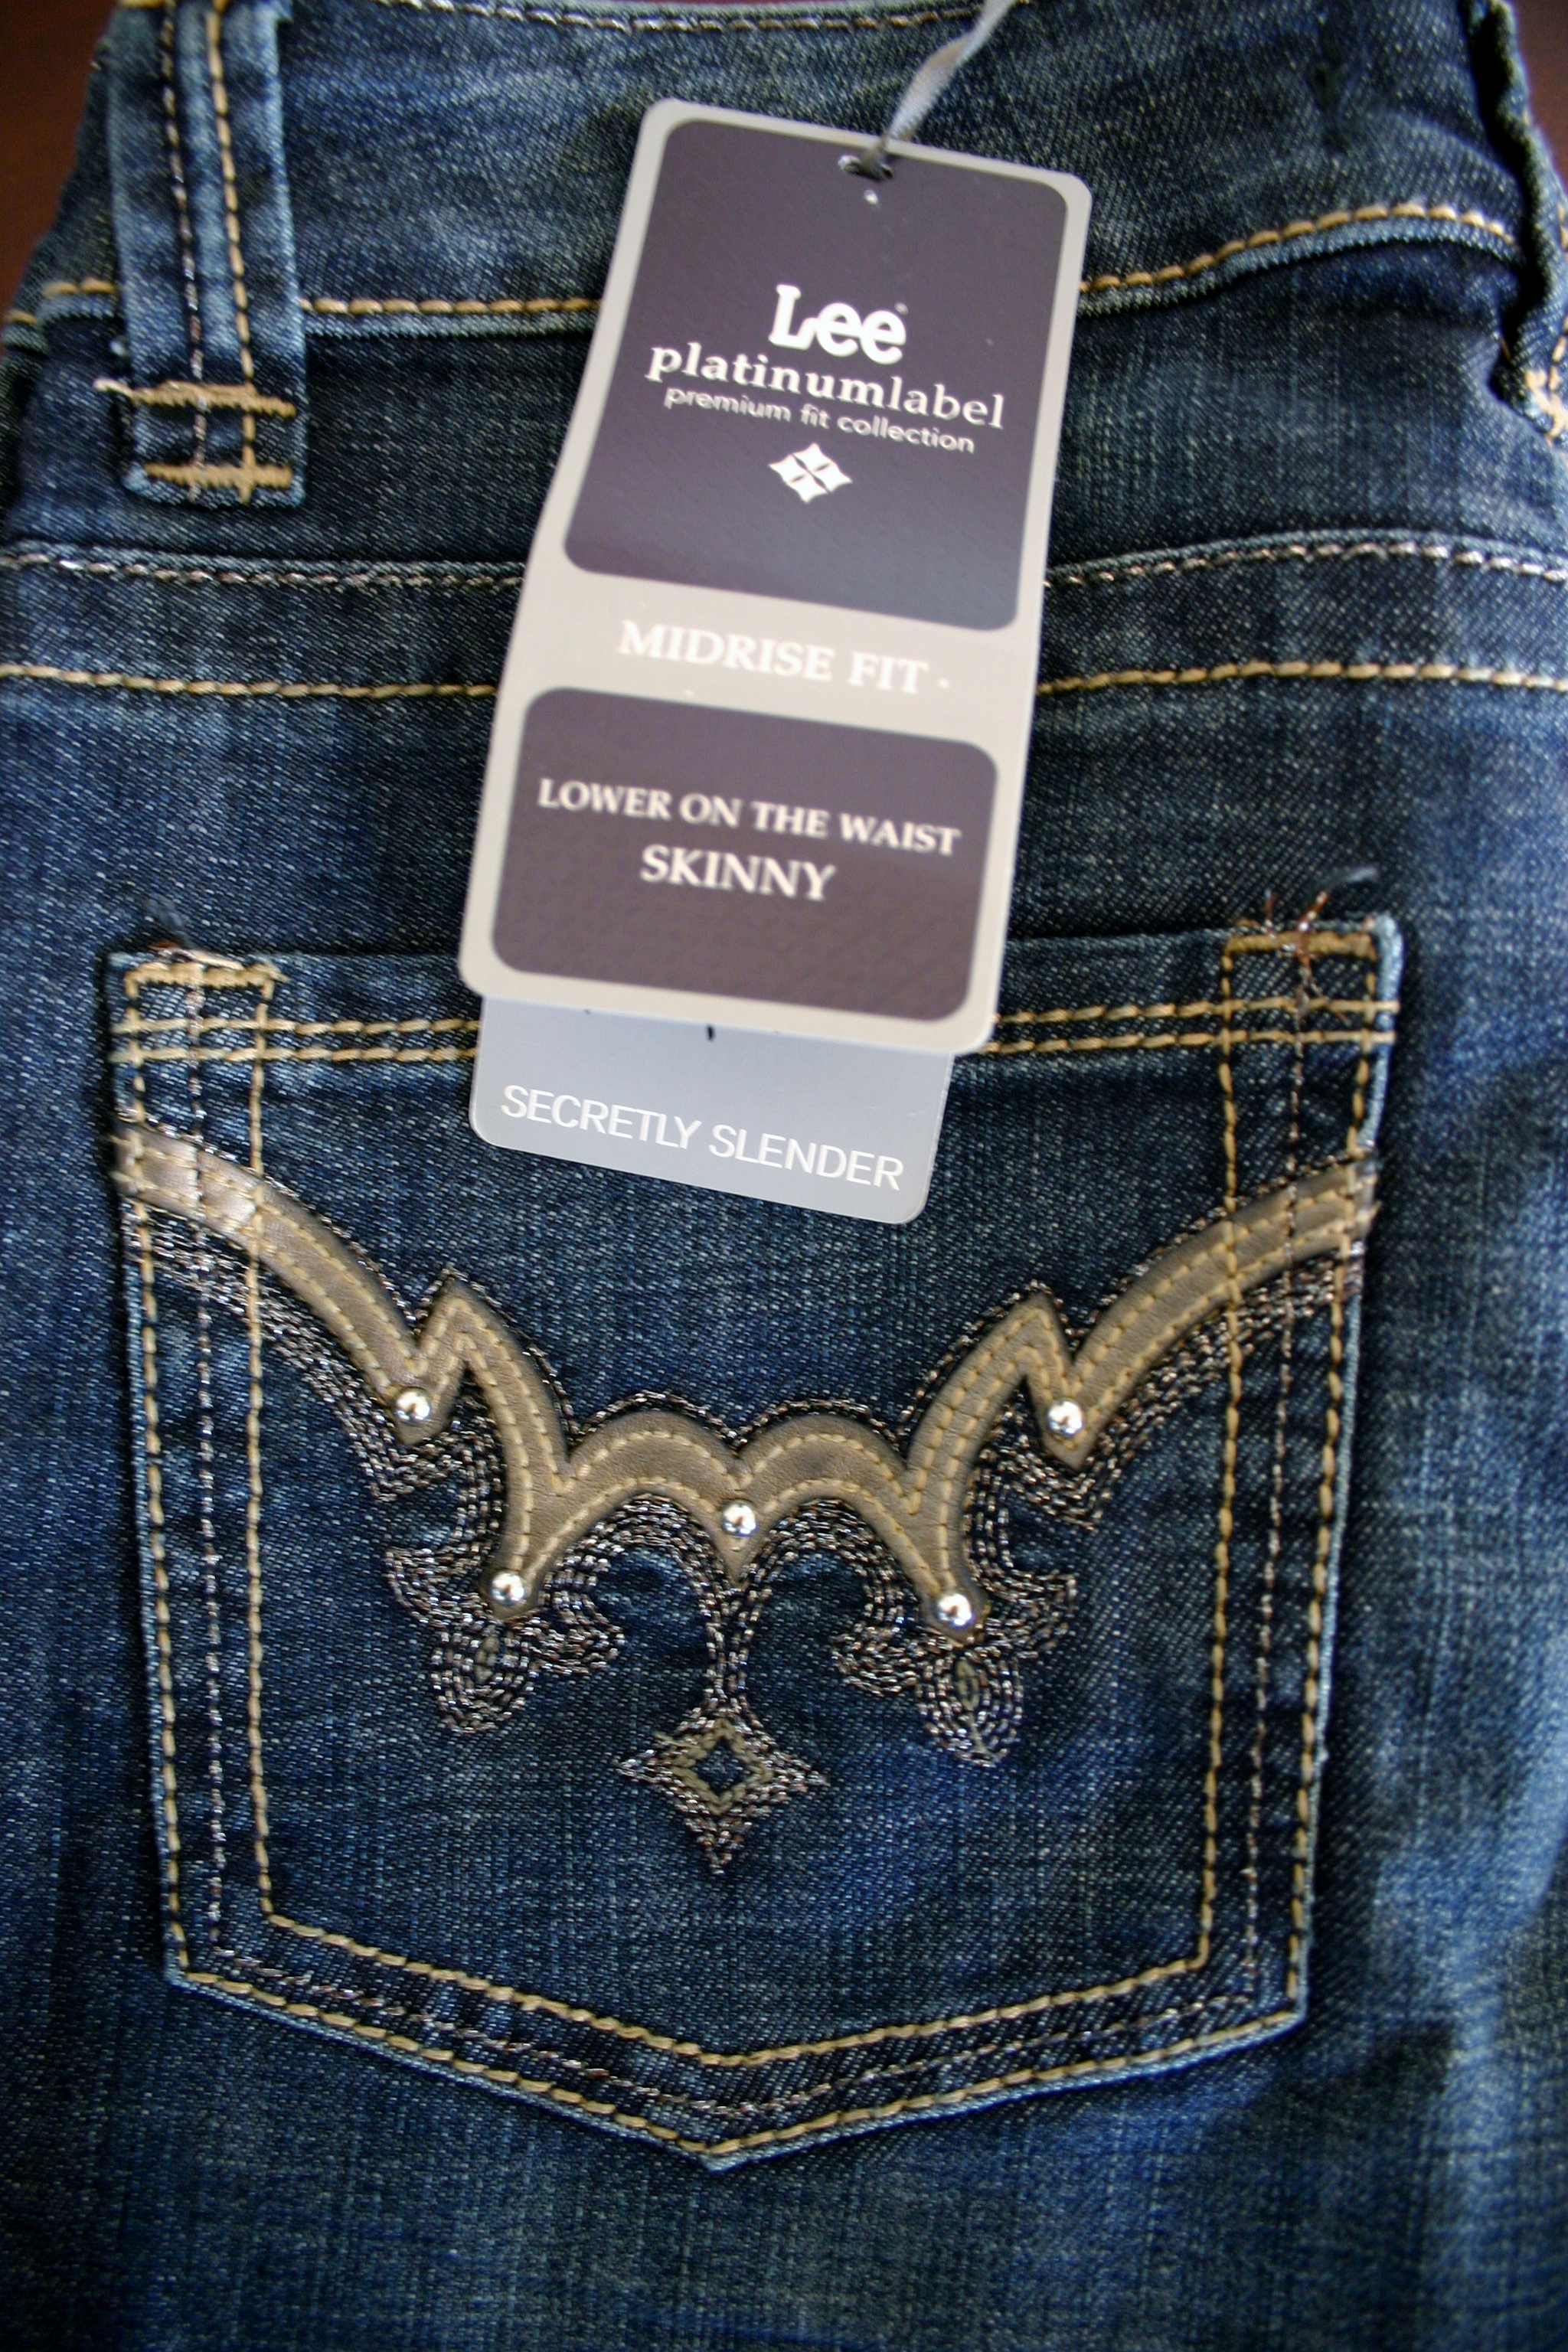 lee platinum label jeans comfort waistband